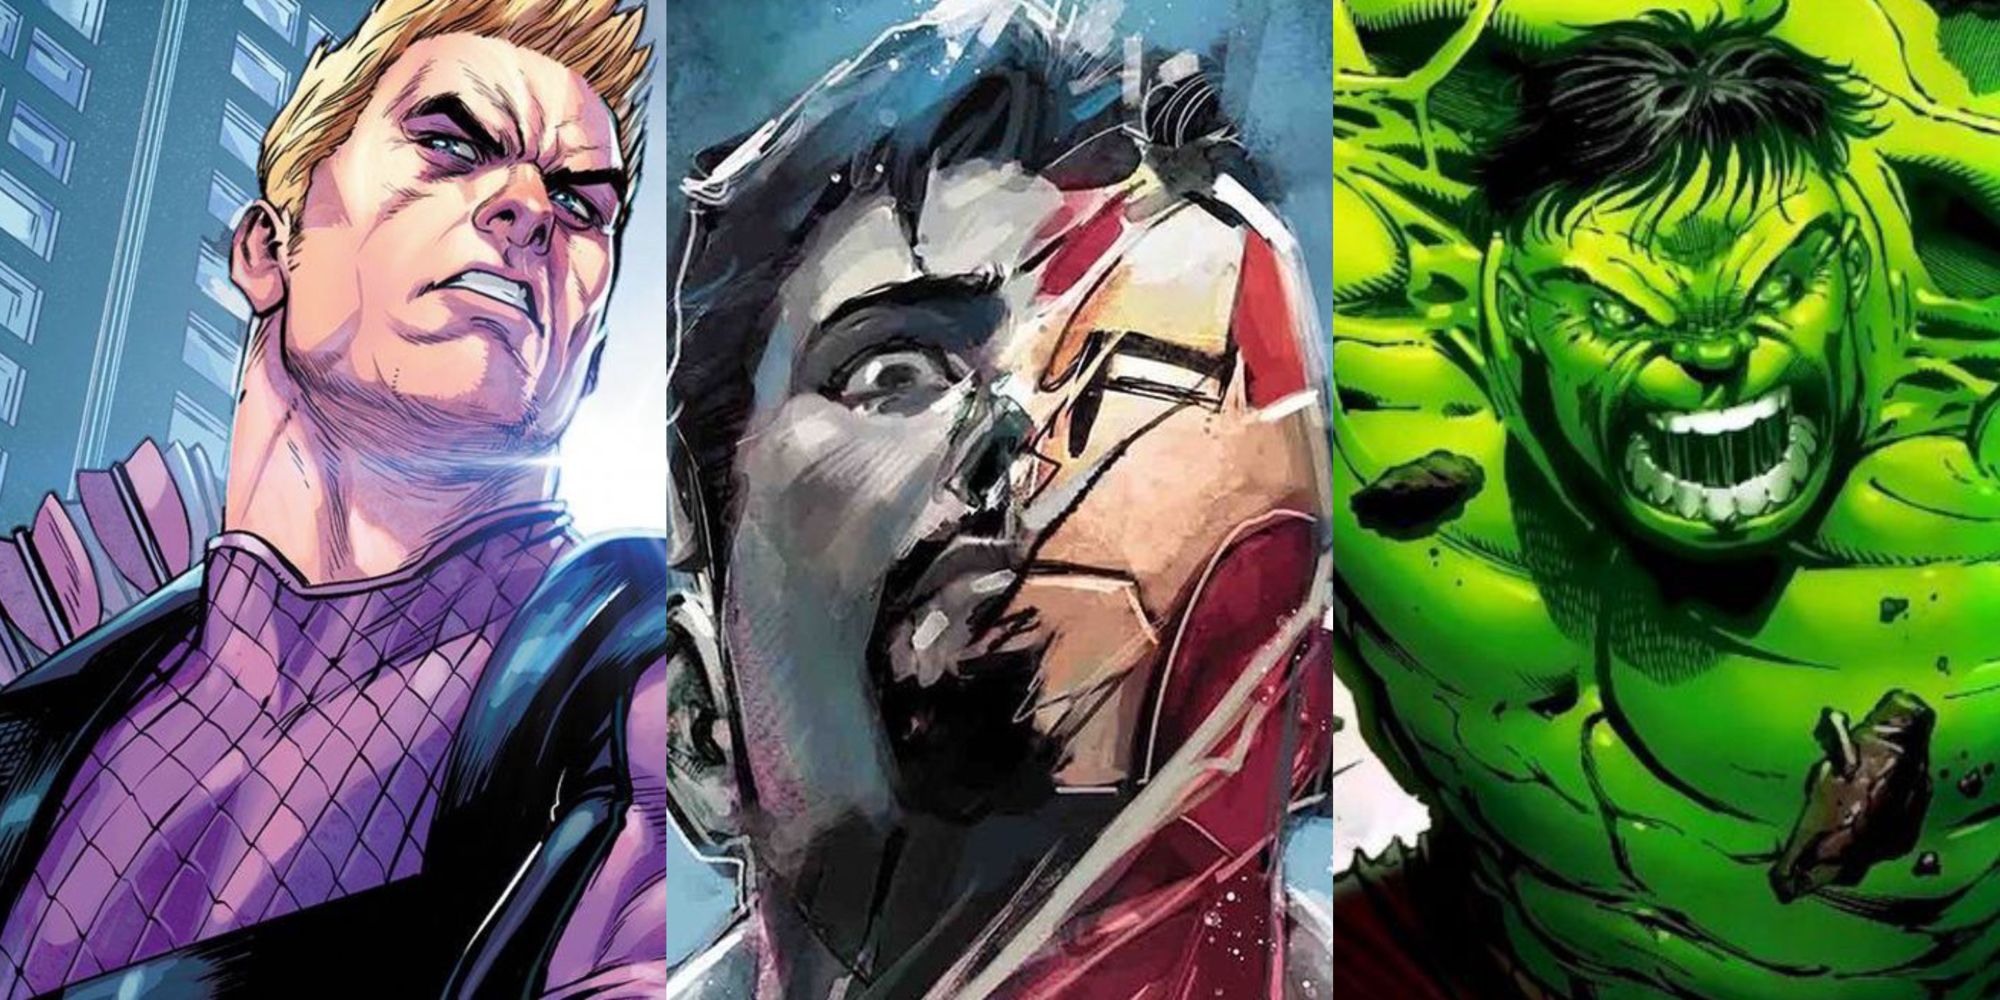 What are Starfox's (Marvel) superpowers? - Quora